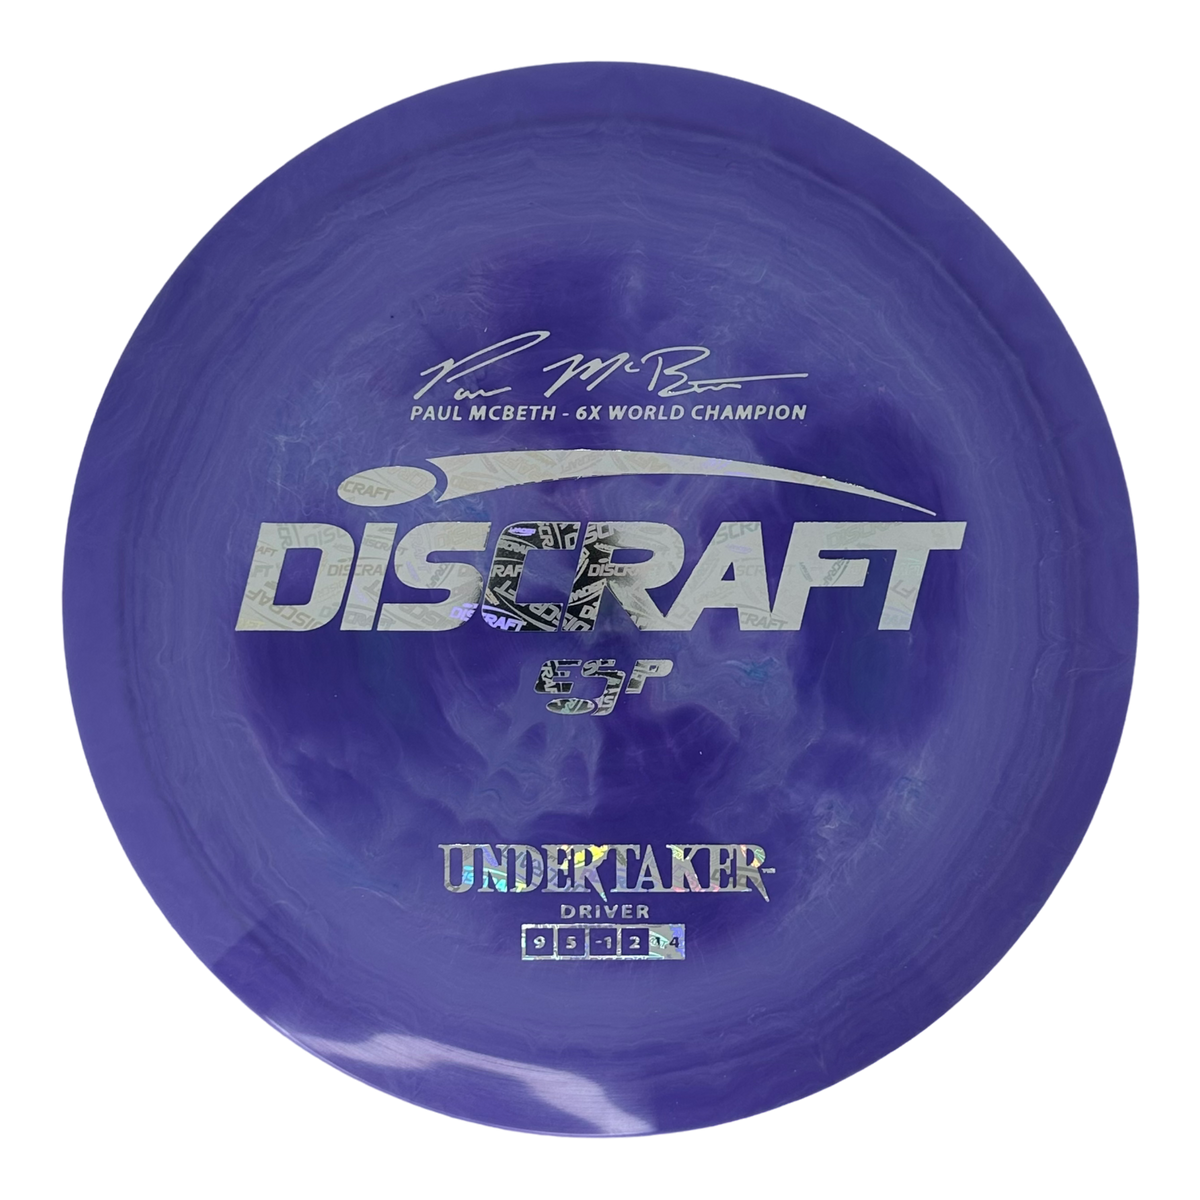 Discraft ESP Undertaker - Paul McBeth 6x Signature Series